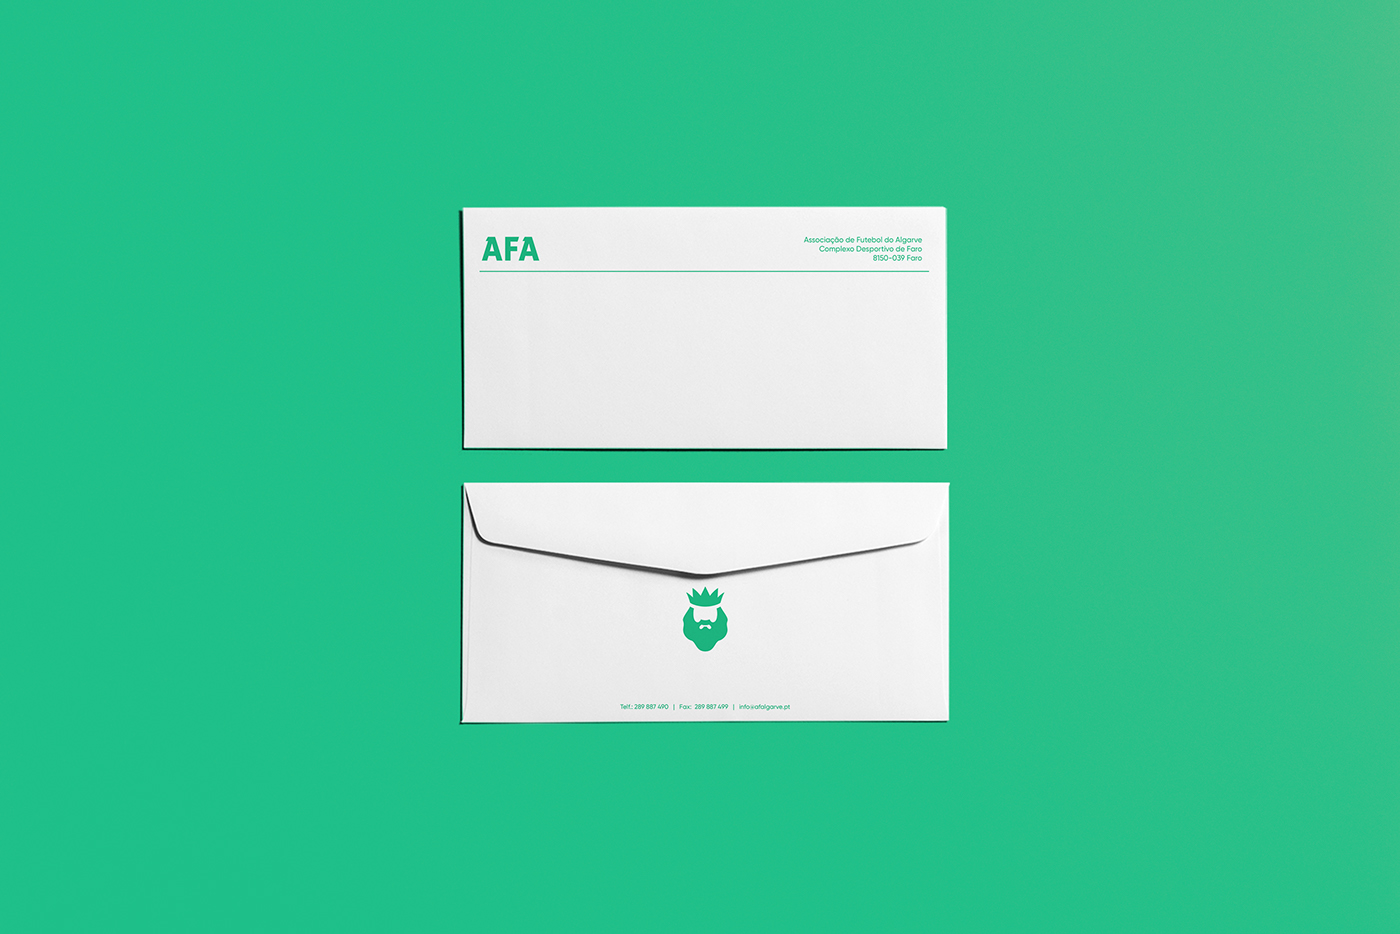 afa futebol soccer logo brand emerald green White king